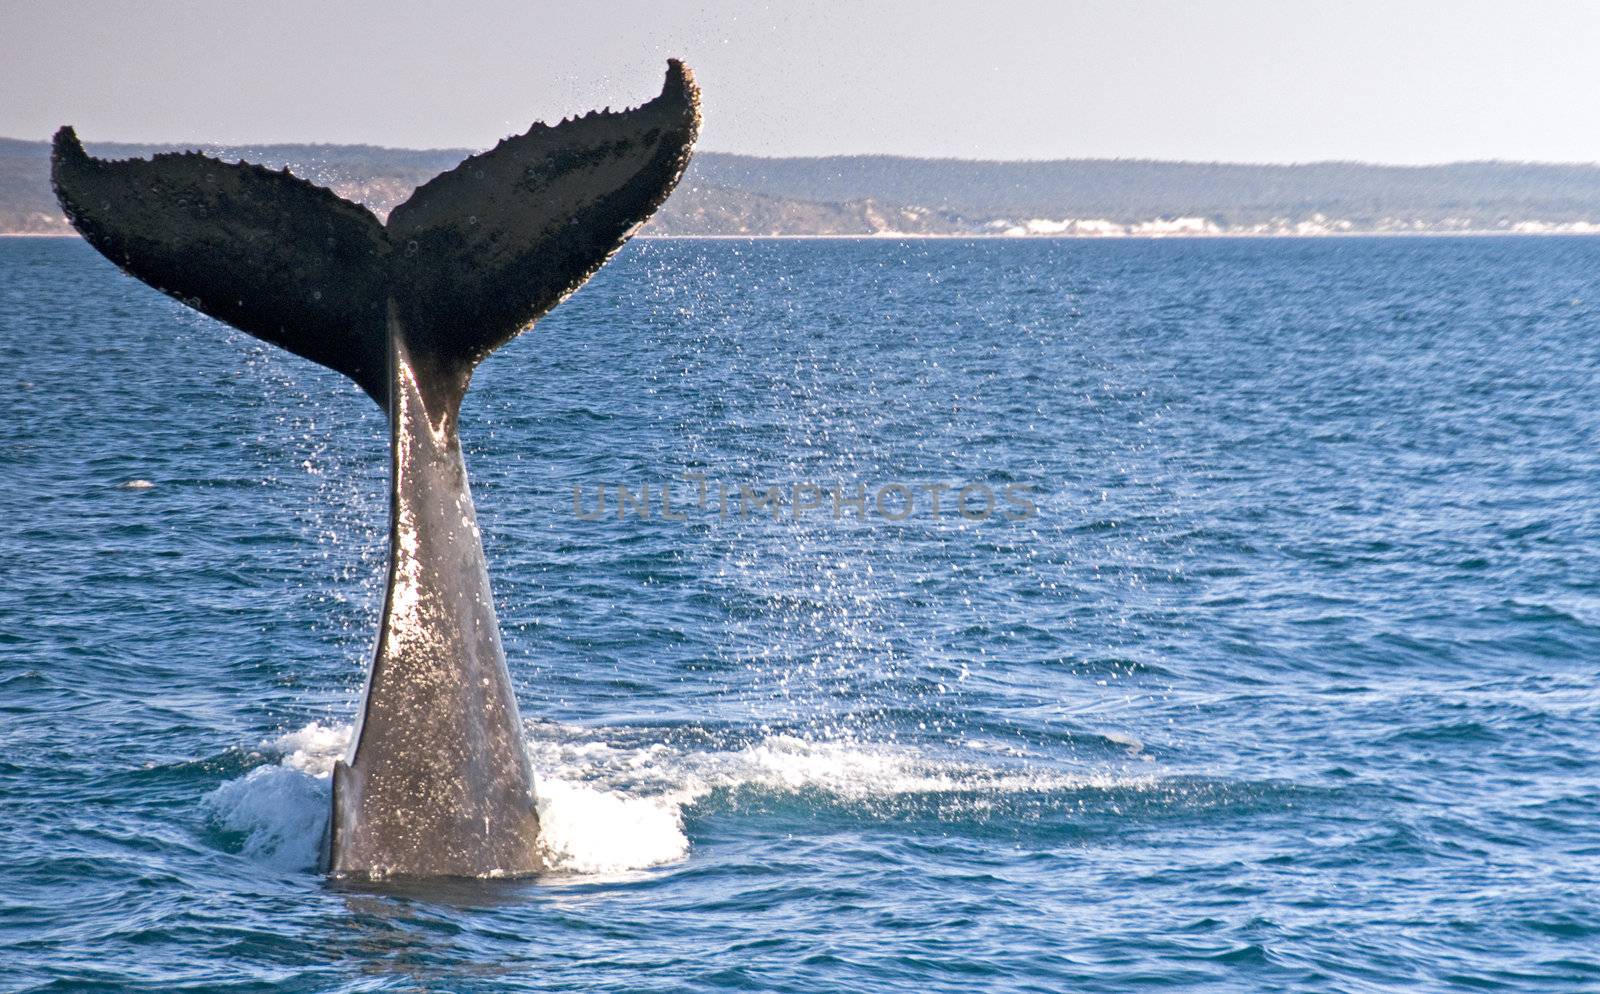 Humpback Whale off the coast of Hervey Bay, Australia